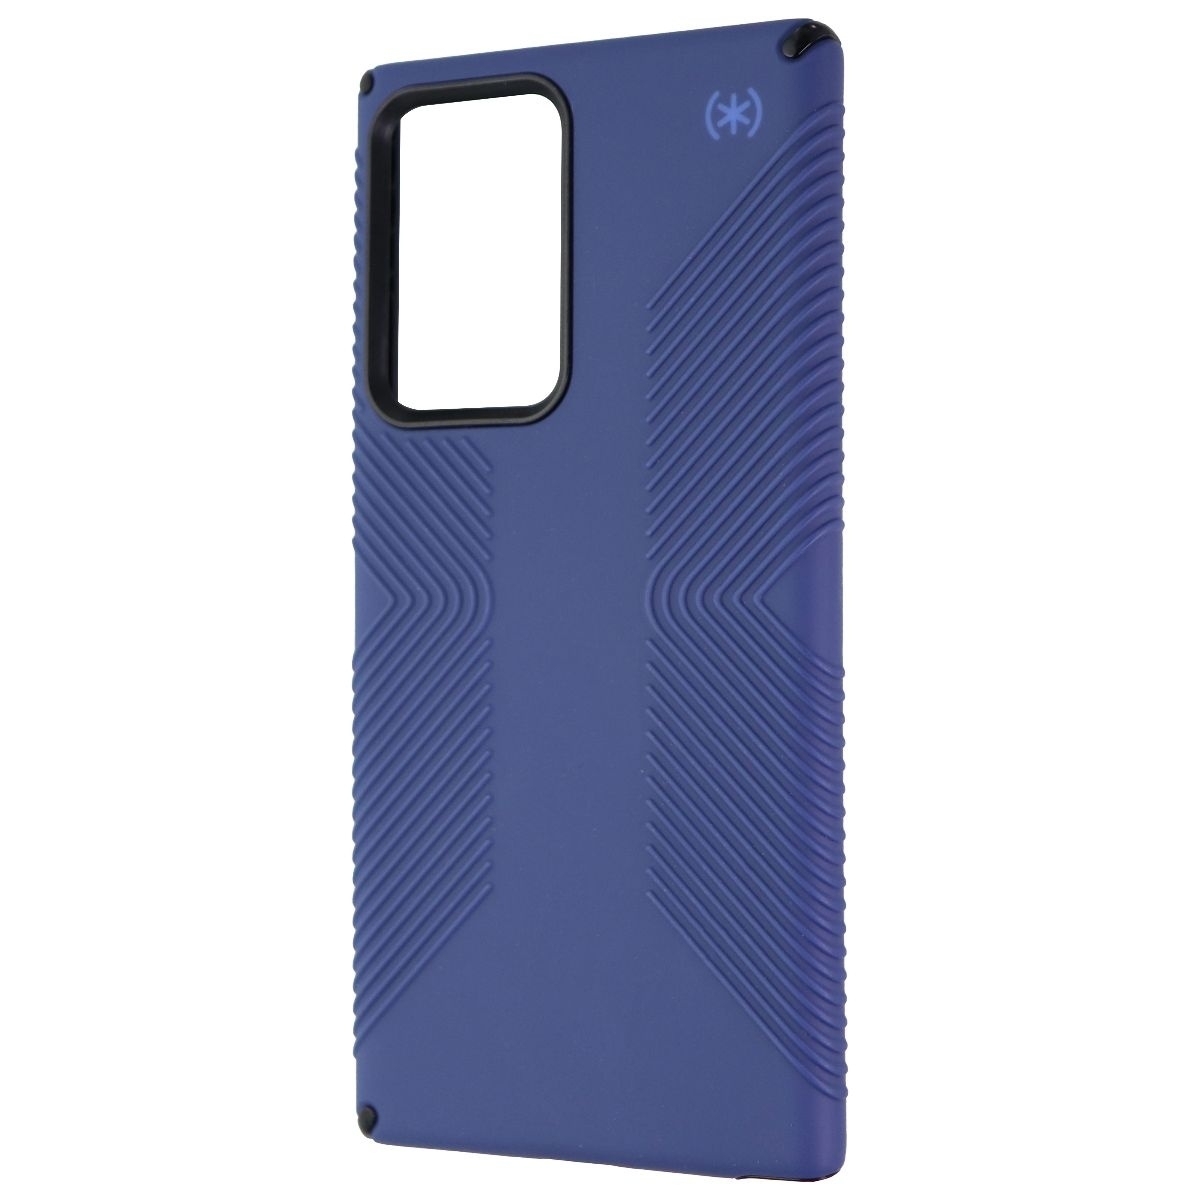 Speck Presidio2 Grip Case for Samsung Note20 Ultra / Ultra 5G - Coastal Blue/Blk - image 1 of 3